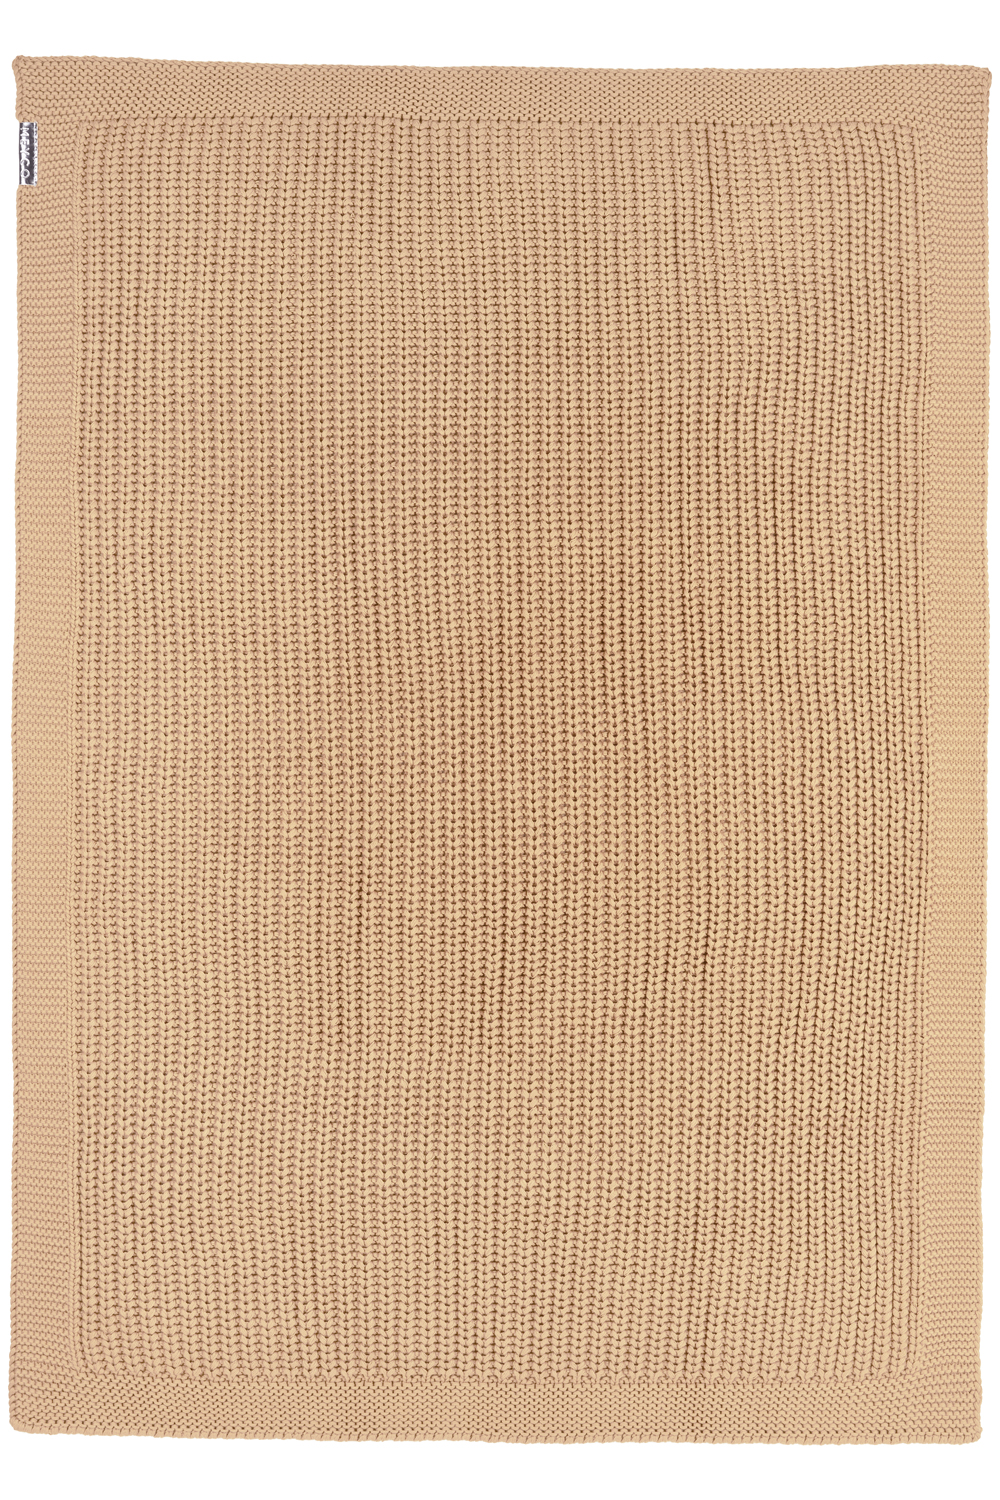 Ledikantdeken Herringbone - Warm Sand - 100x150cm